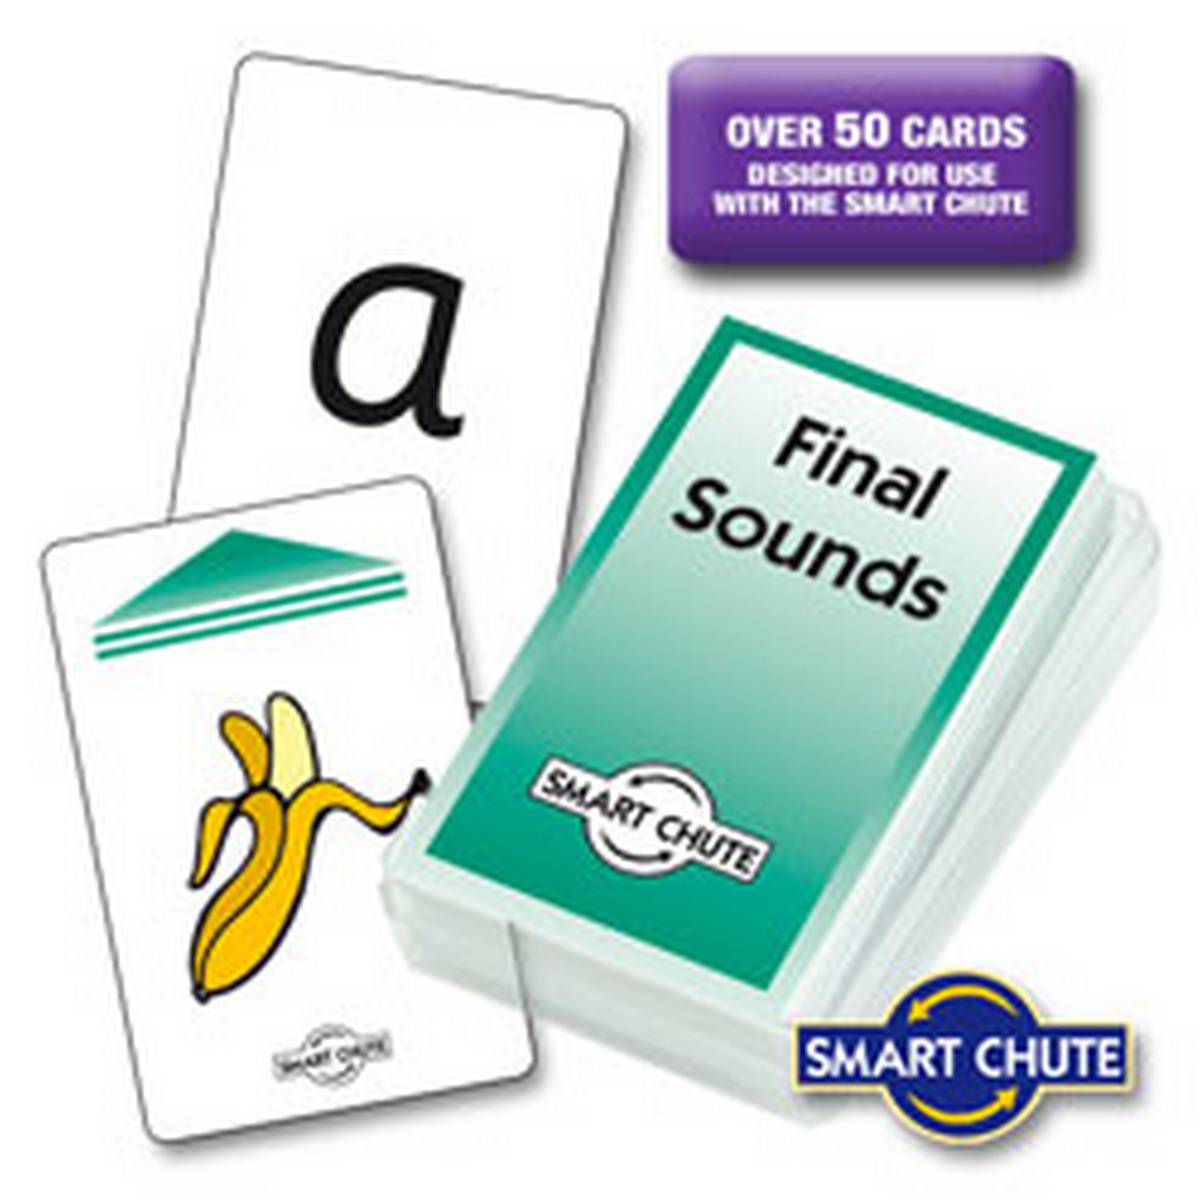 Final Sounds Chute Cards